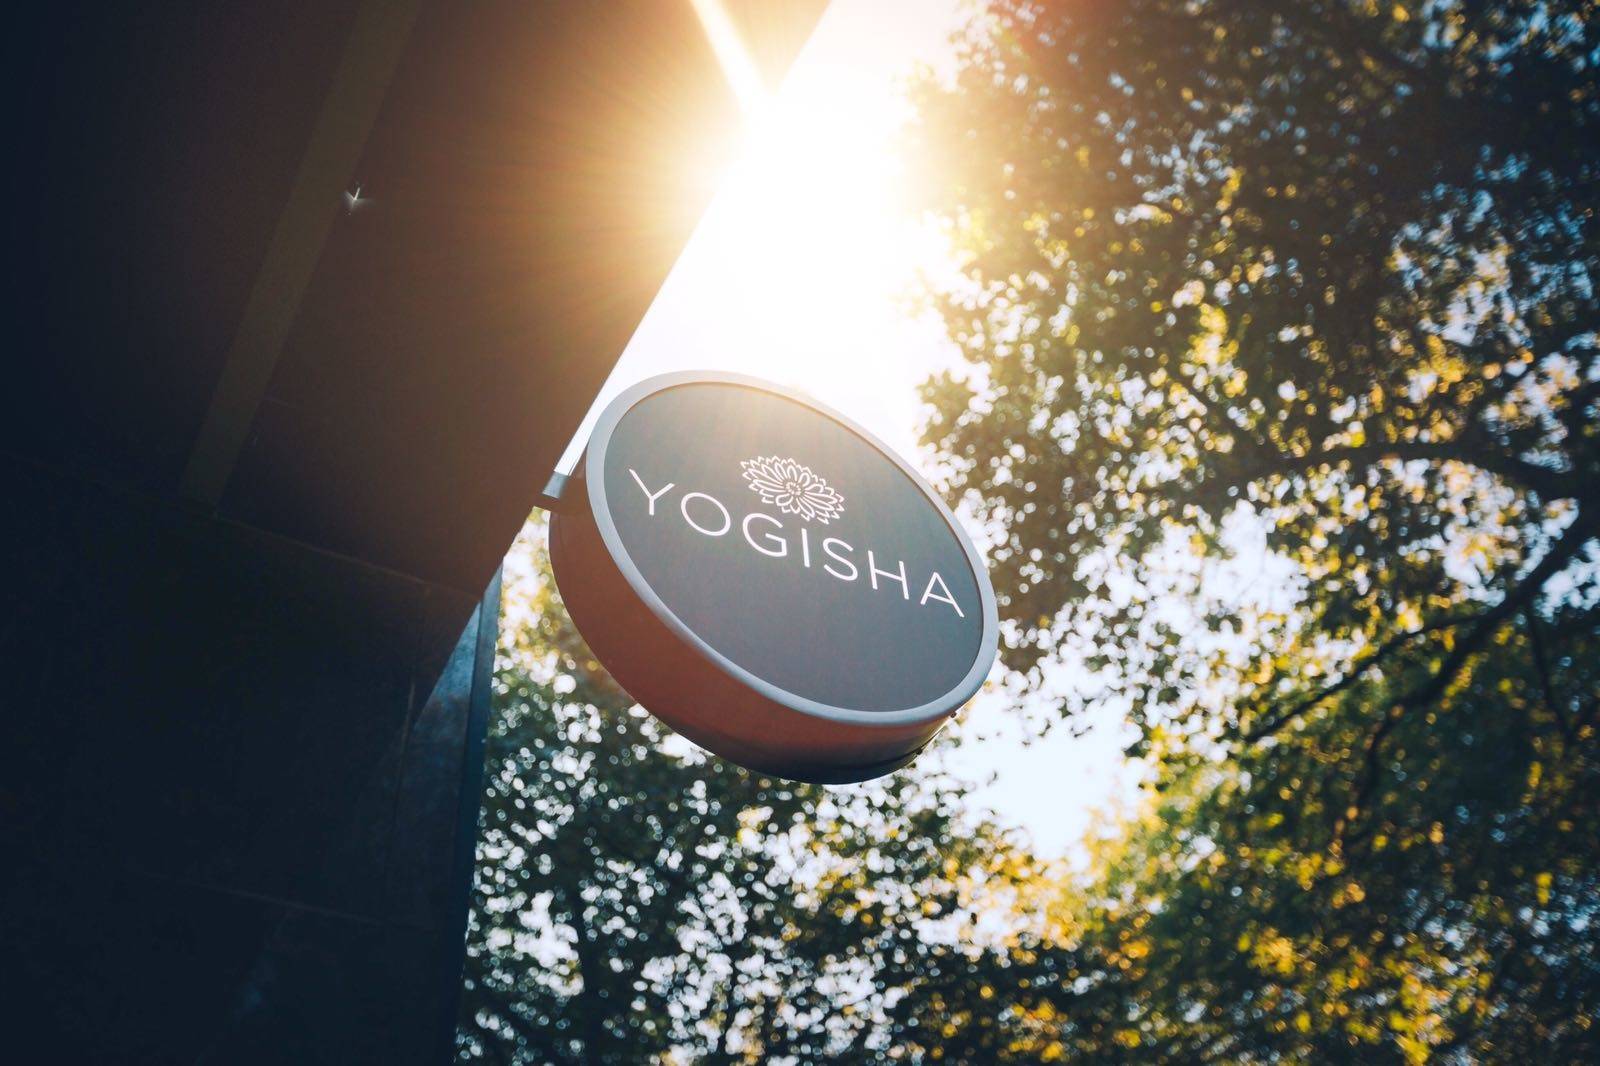 Yoga shop Amsterdam - Yogisha Amsterdam